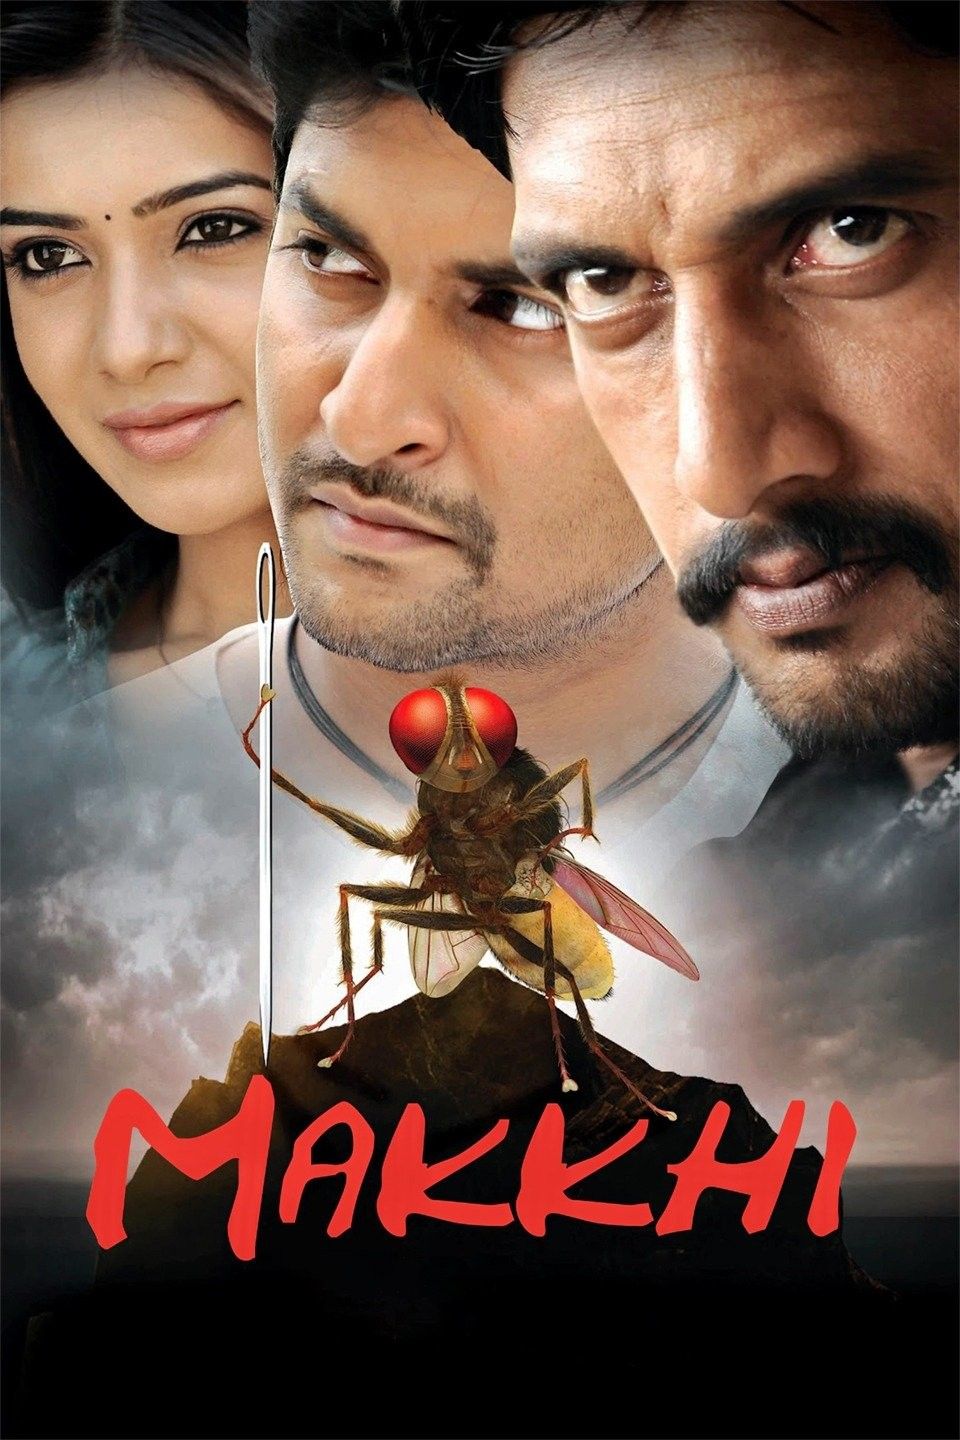 Makkhi (Eega) 2012 Hindi Dubbed BluRay download full movie